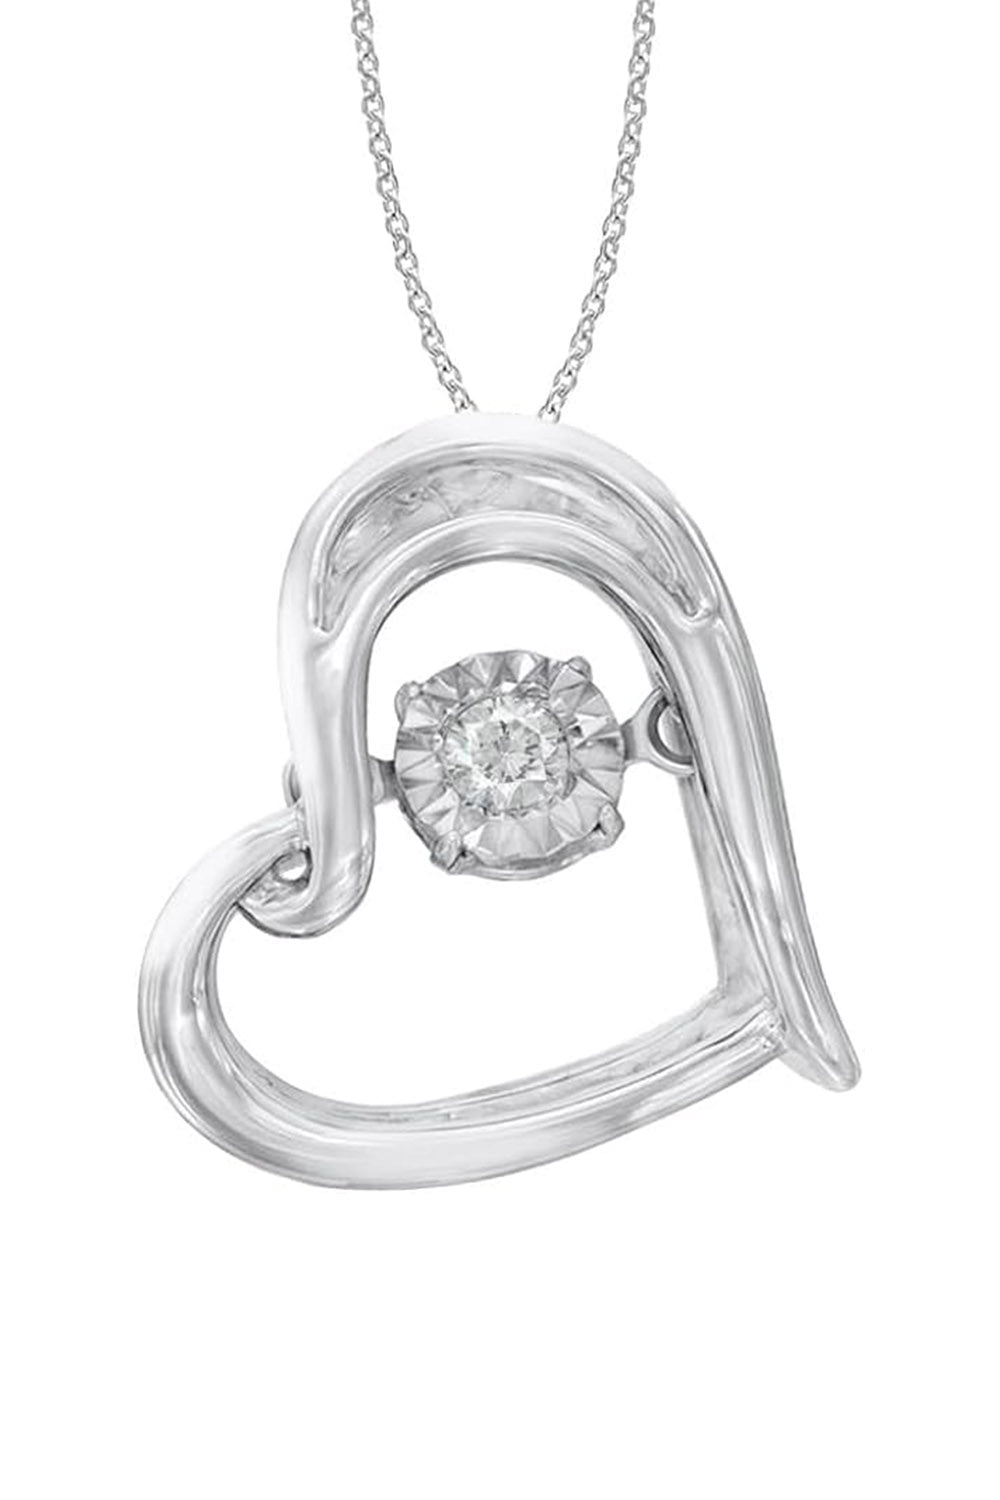 White Gold Color Moissanite Heart Pendant Necklace, Buy Pendants Online